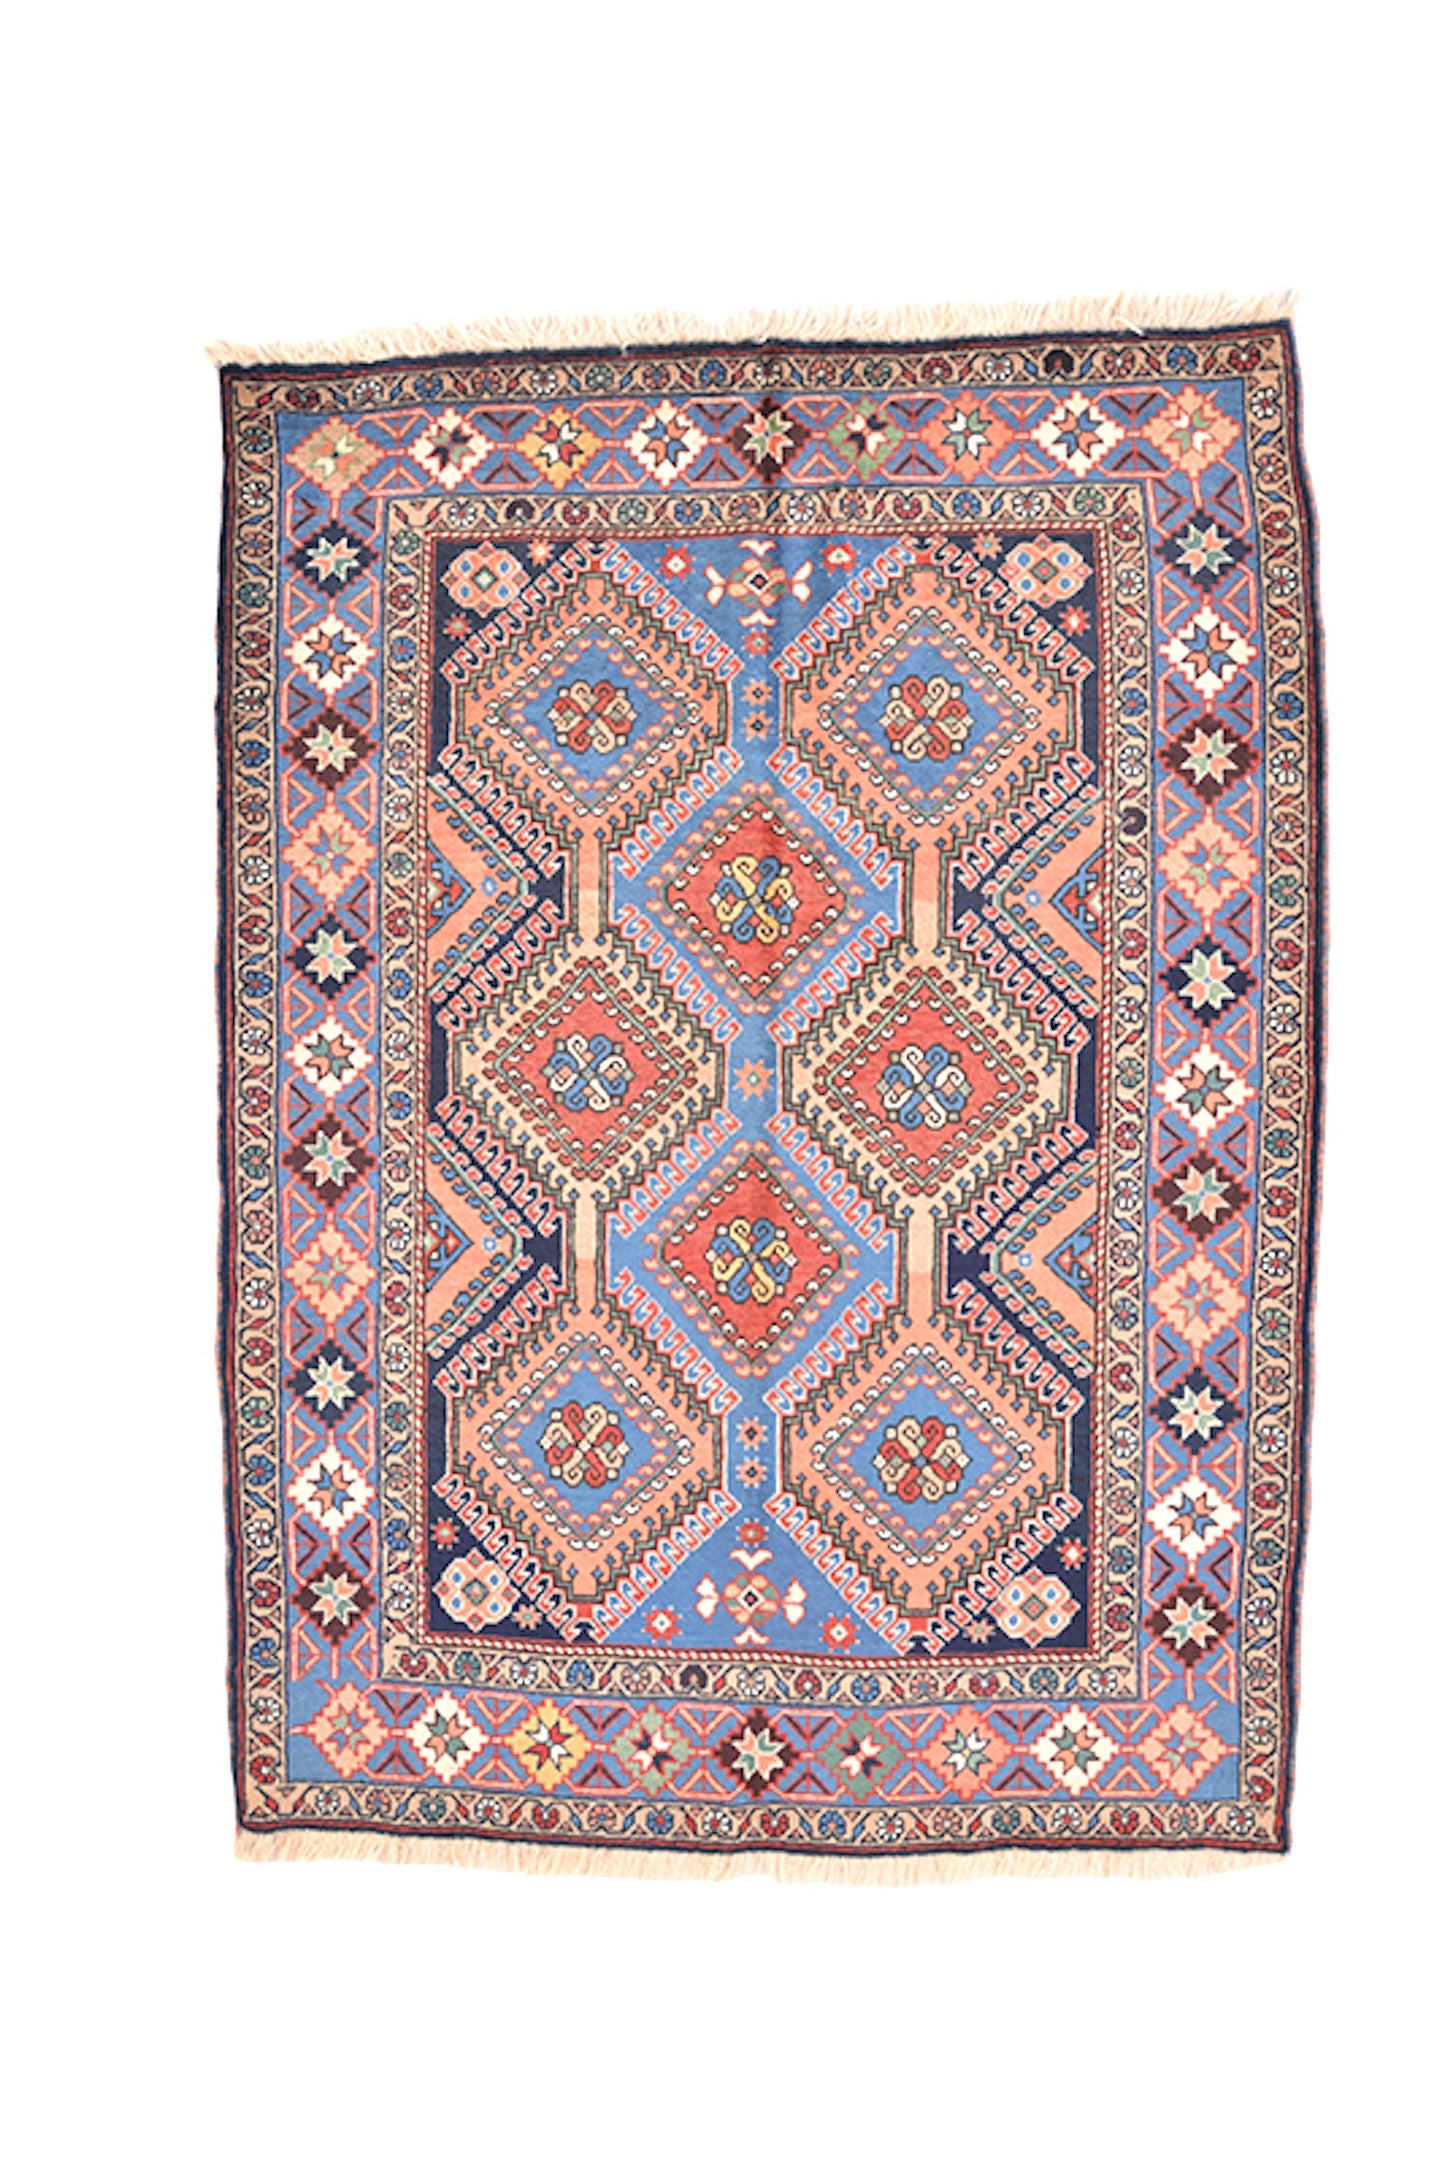 Blue Coral Ikat Rug | 4.9 x 3.6 Ft Rug | Handmade Caucasian Persian Rug | Diamond Medallions Tribal Rug | Vintage Wool Area Rug